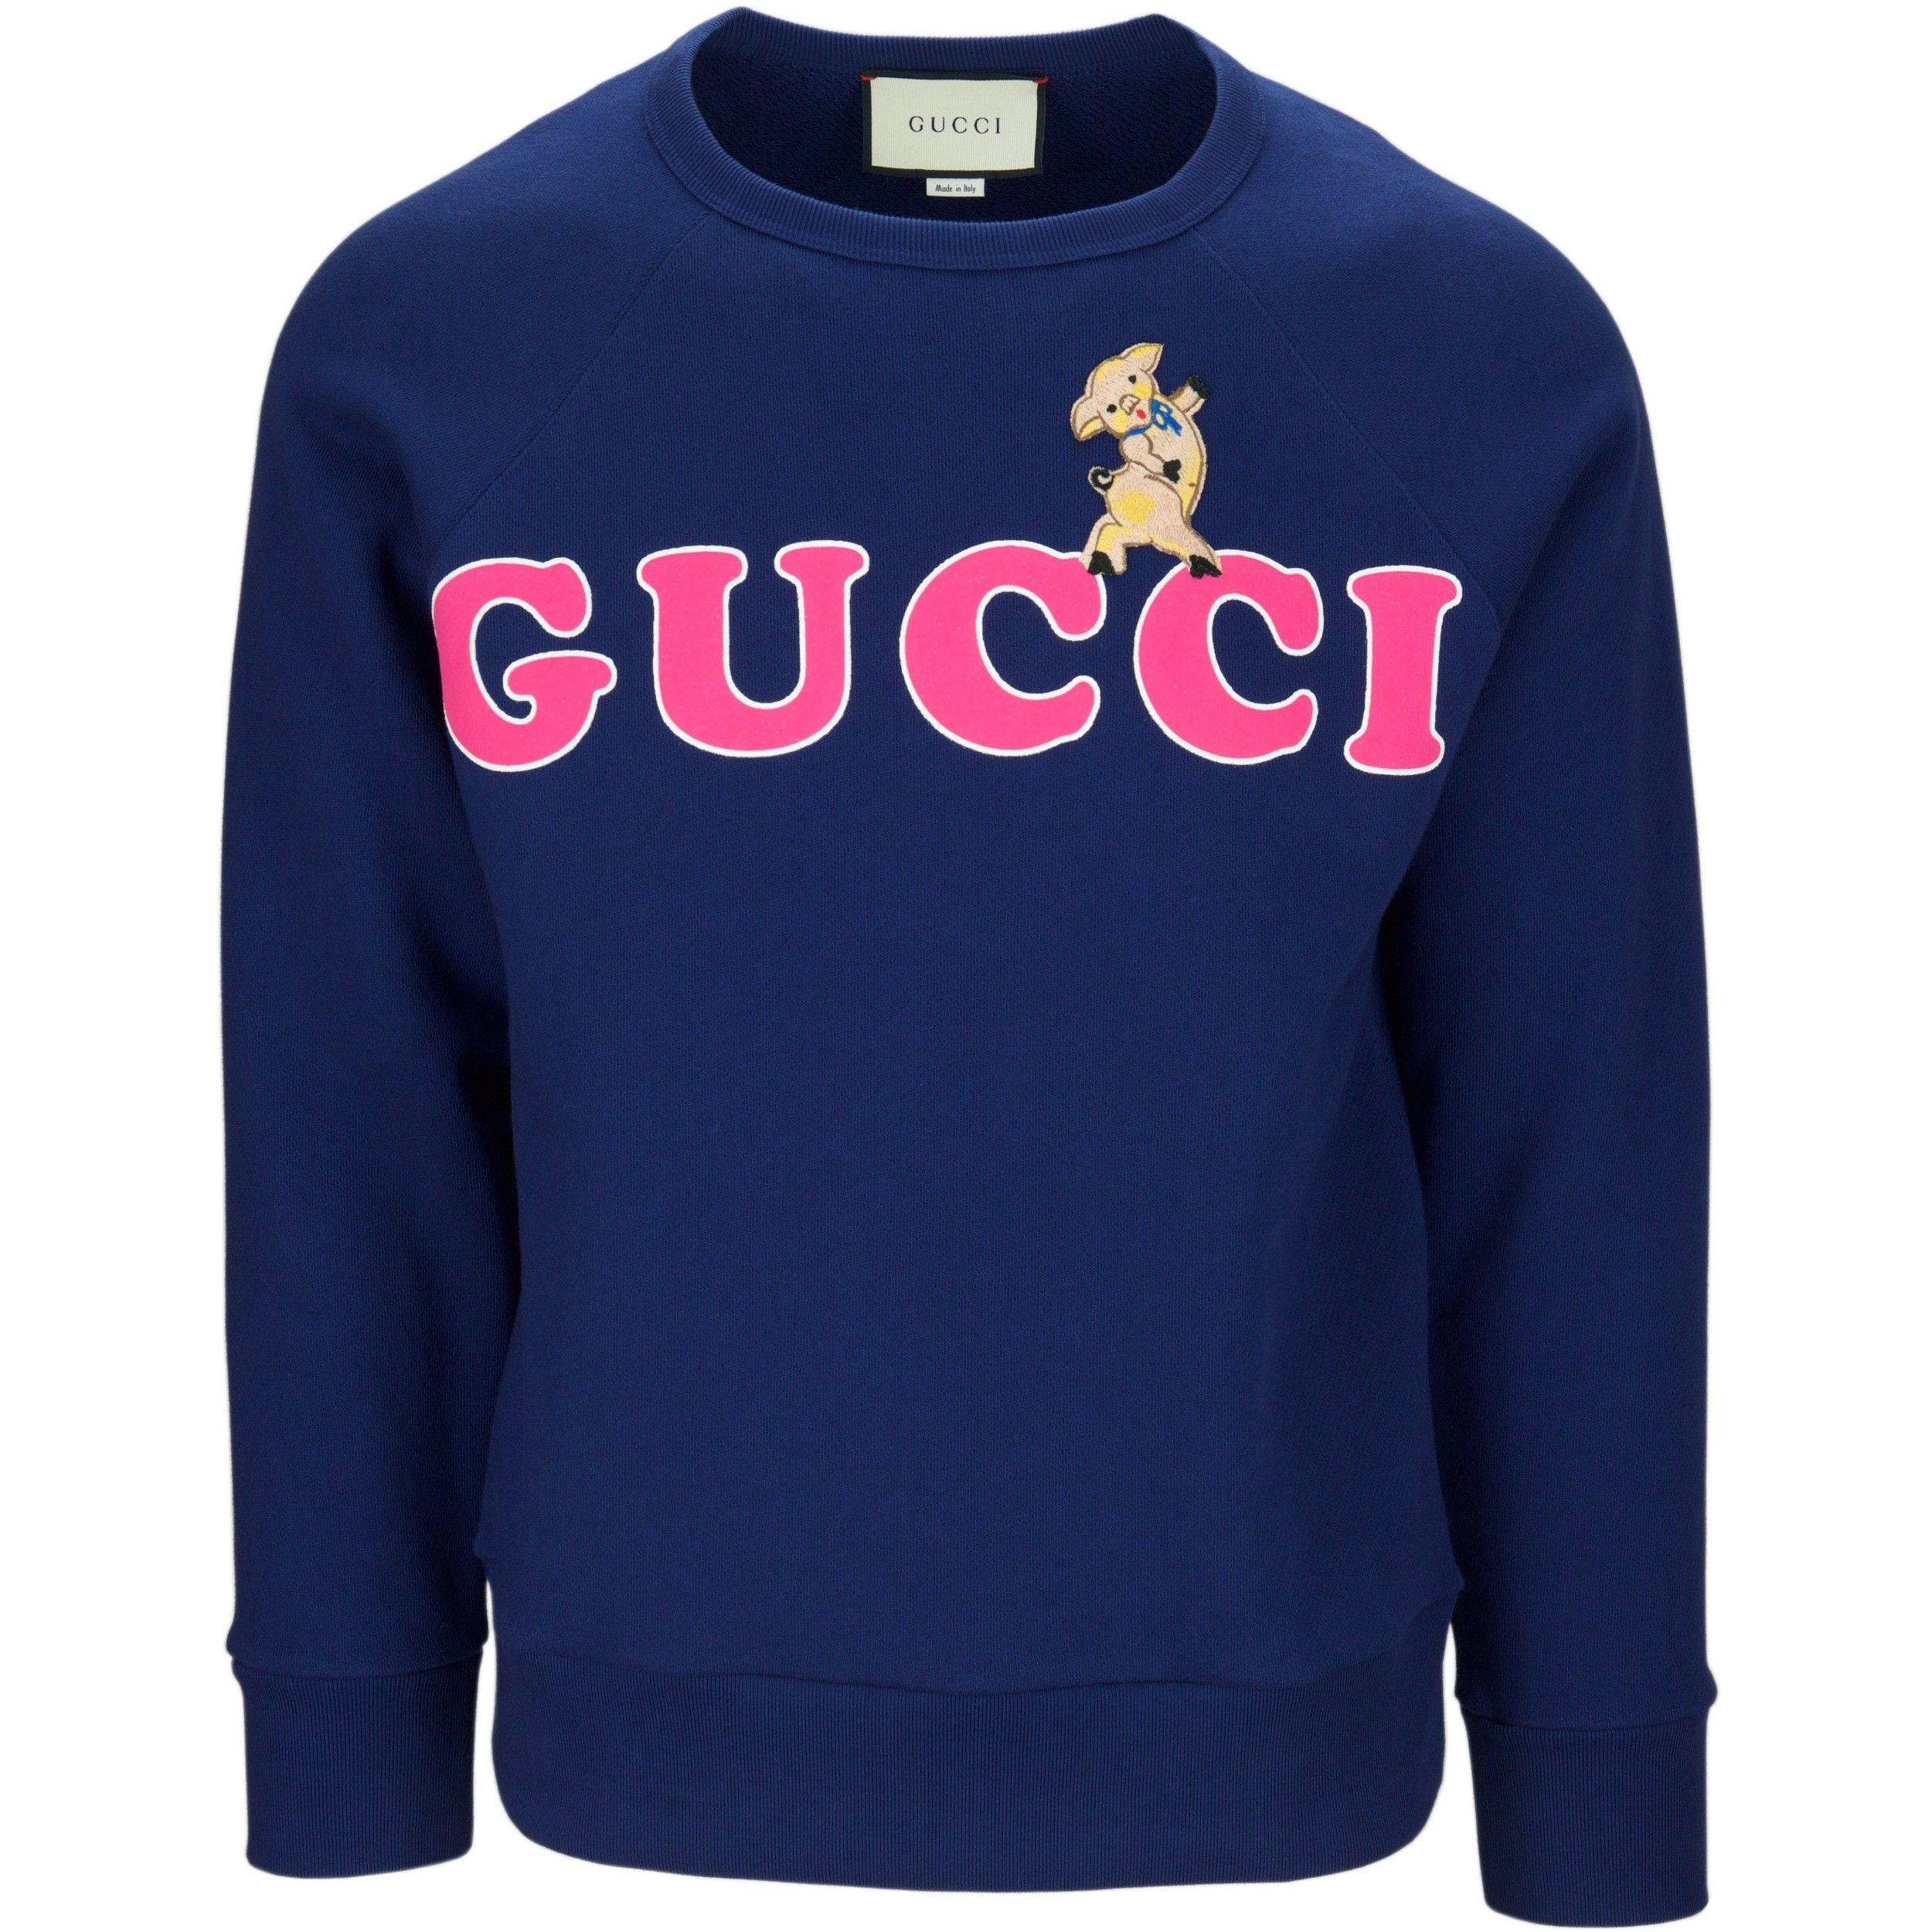 Gucci Clothing Logo - Gucci Pig Patch Logo Sweatshirt